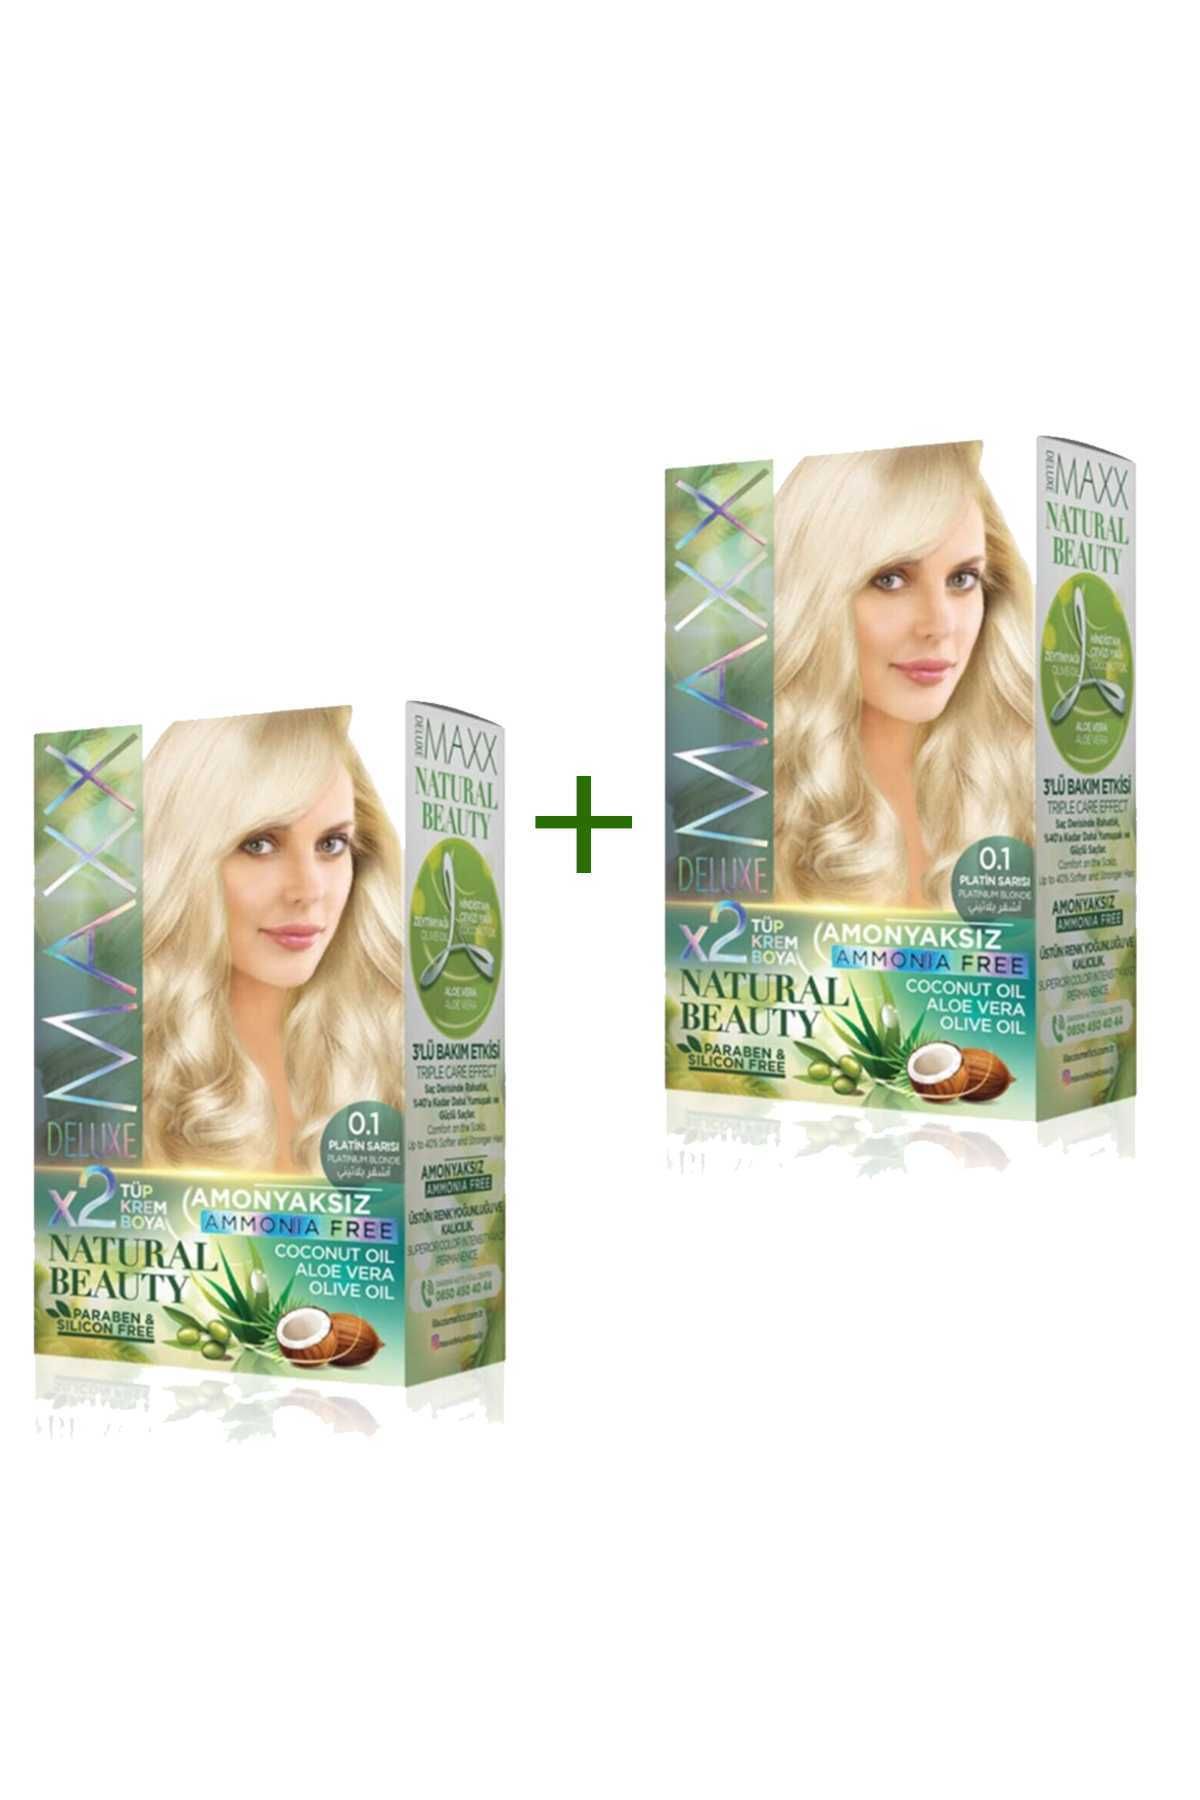 MAXX DELUXE 2 Paket Natural Beauty Amonyaksız Saç Boyası 0.1 Platin Sarısı